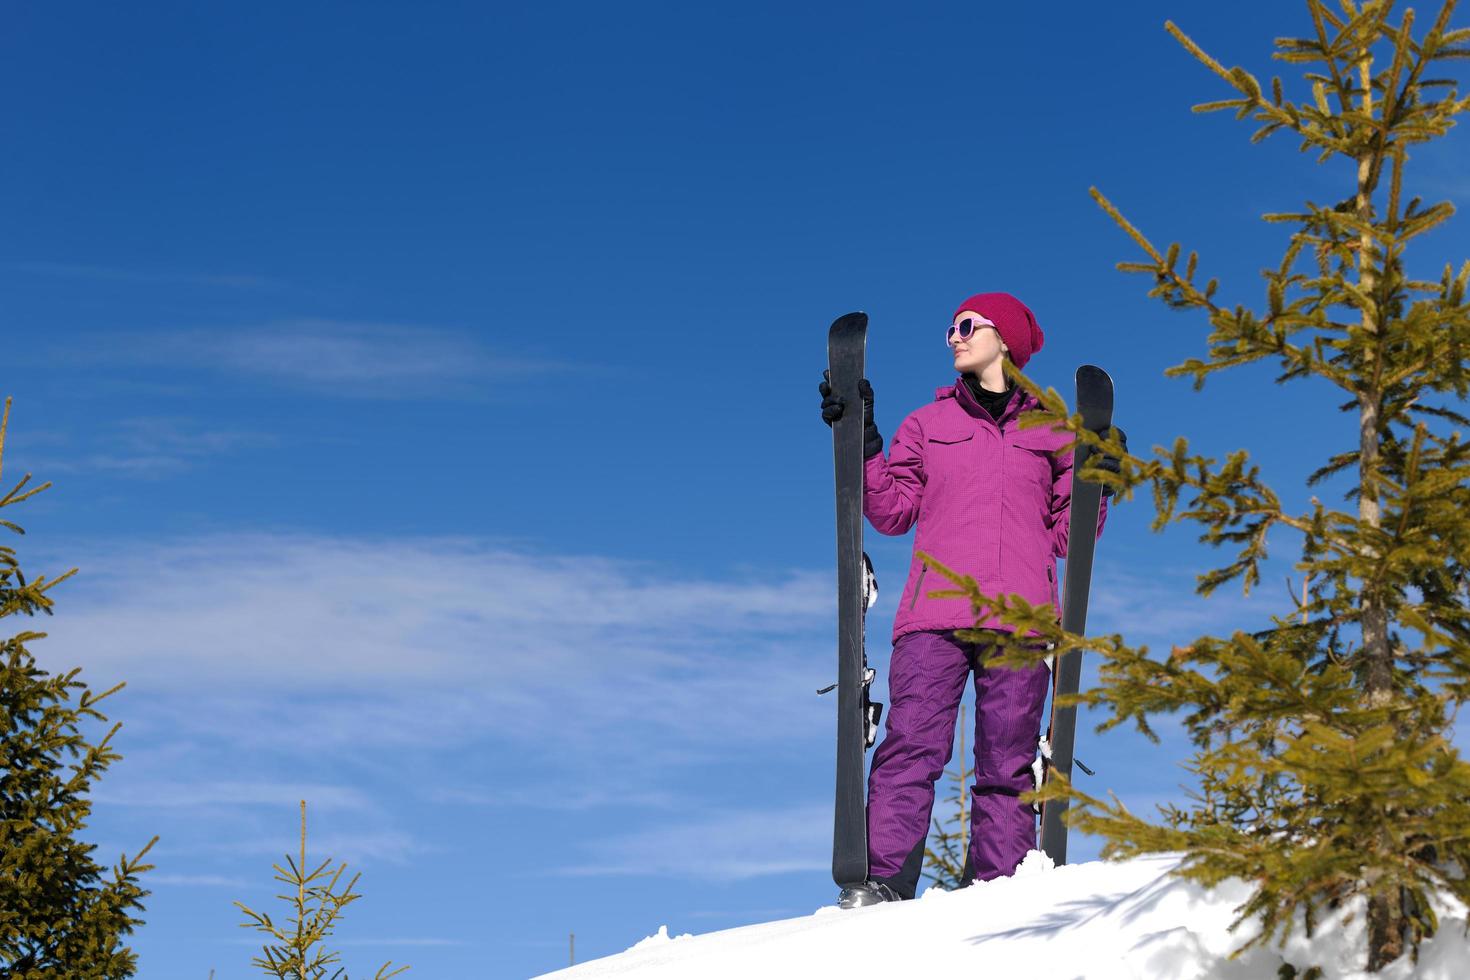 winter vrouw ski foto